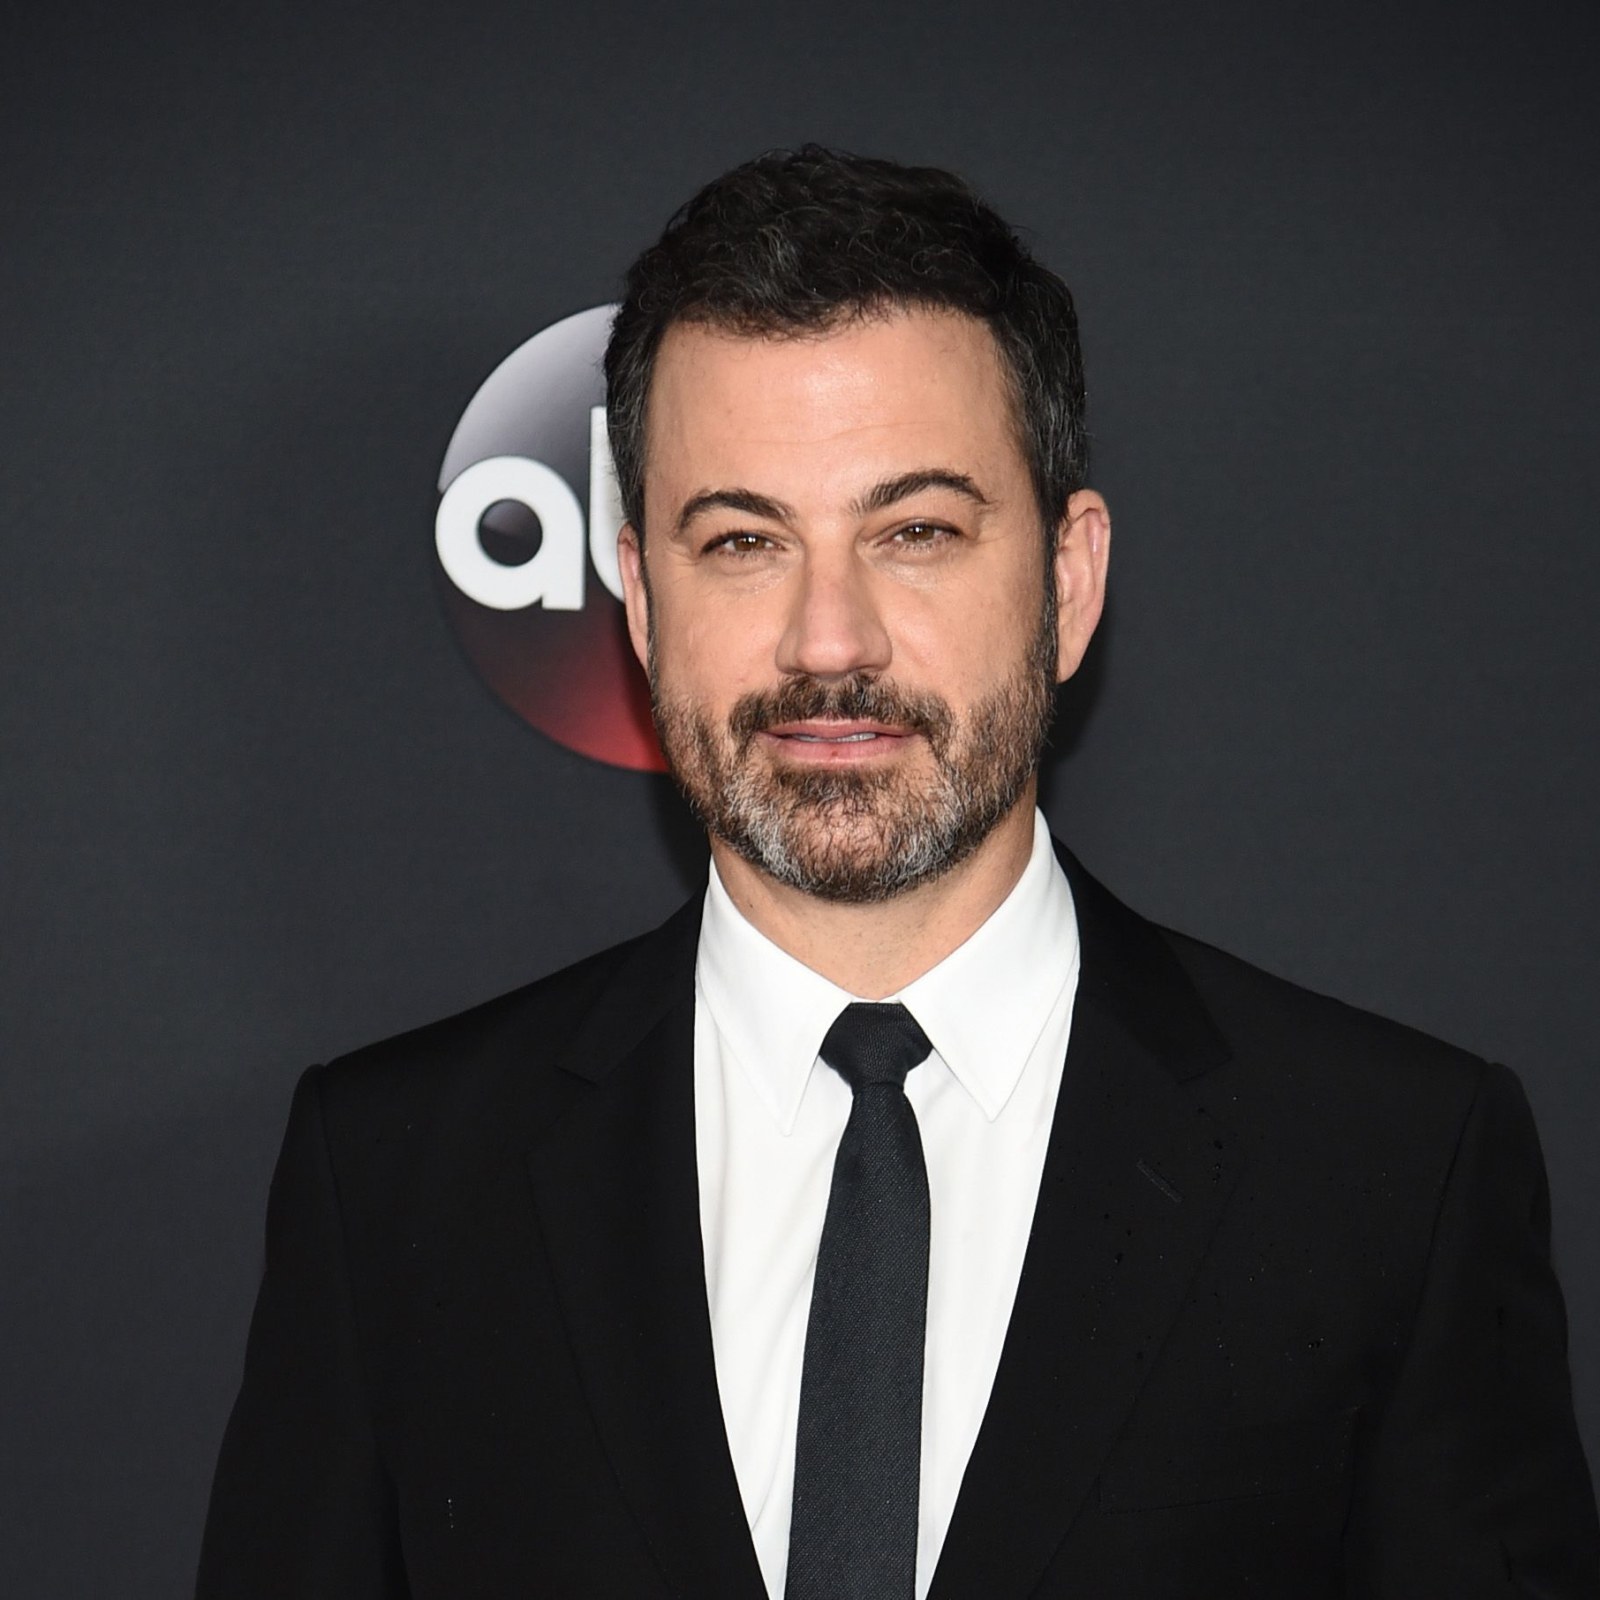 Jimmy Kimmel Under Fire Again For Sexual Joke About Underage Megan Fox